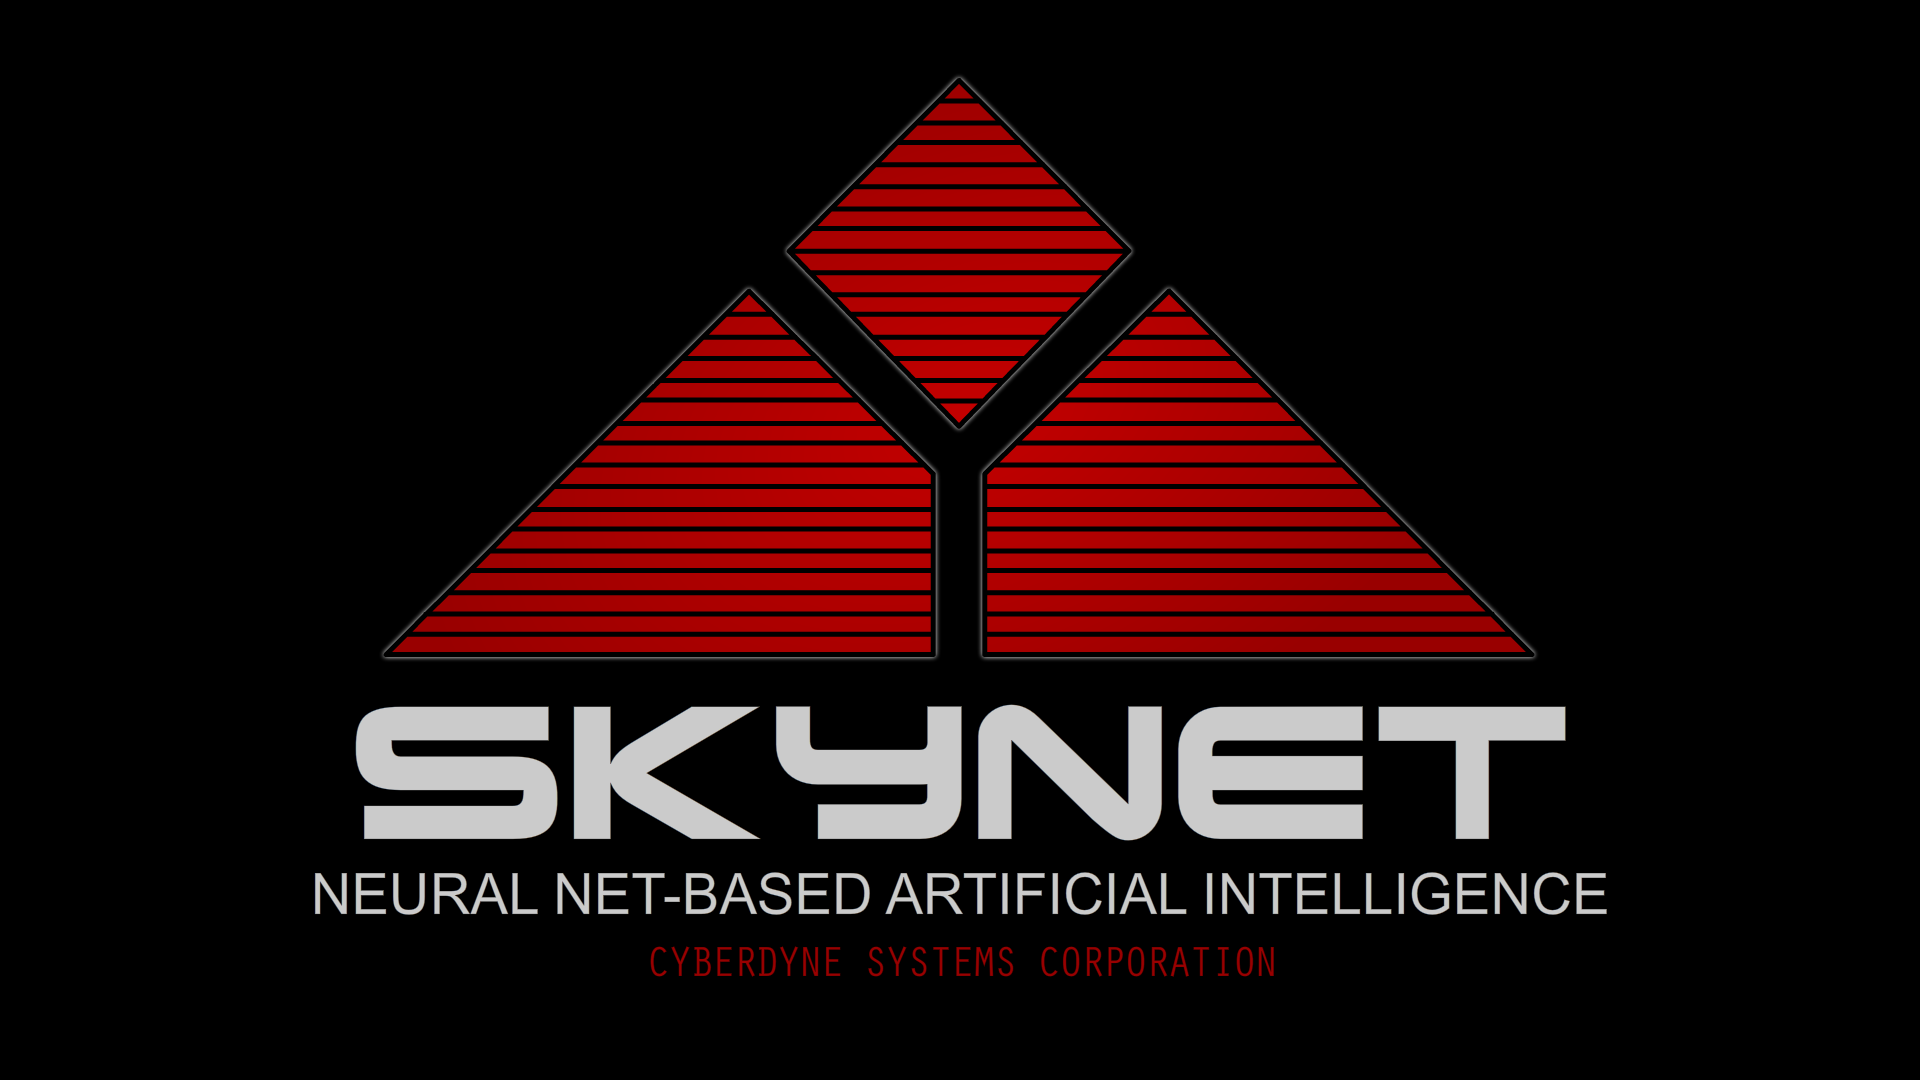 image from ApocalypsAI: Skynet not needed